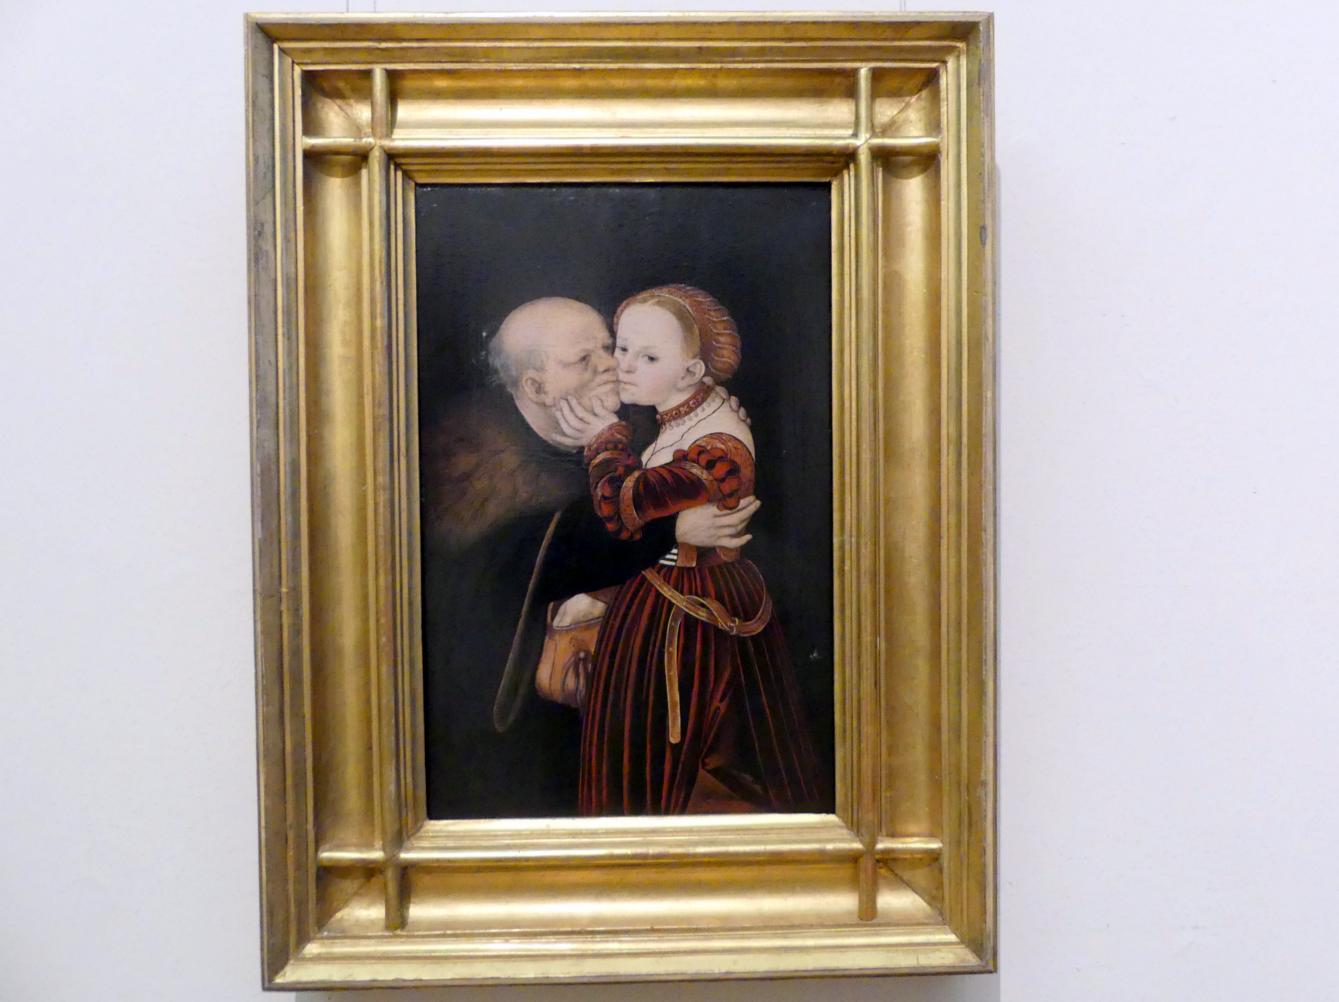 Lucas Cranach der Ältere (1502–1550), Das ungleiche Paar, Prag, Nationalgalerie im Palais Sternberg, Erdgeschoss, um 1530, Bild 1/2